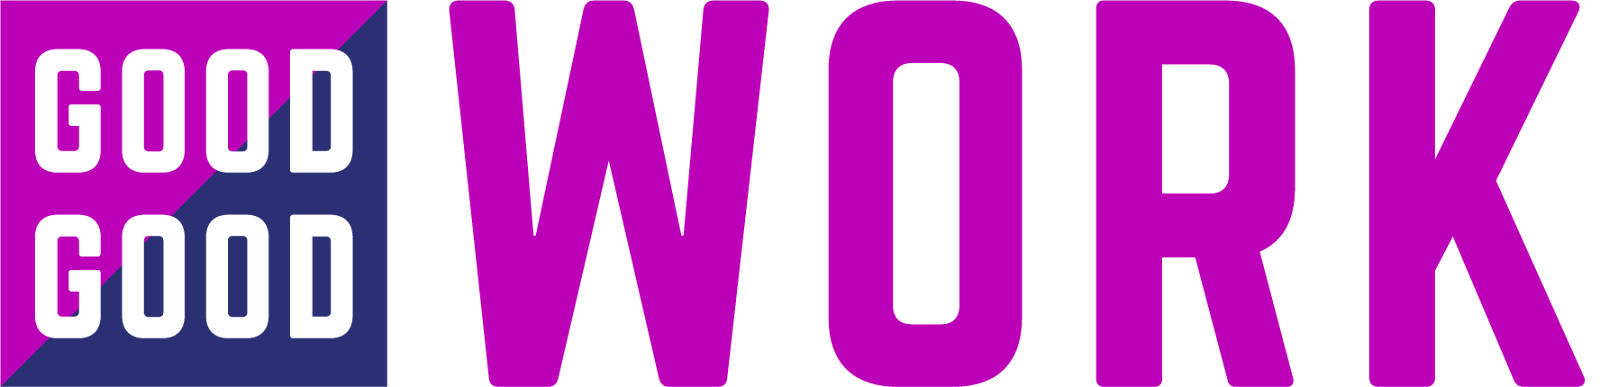 ggw-logo-18.png